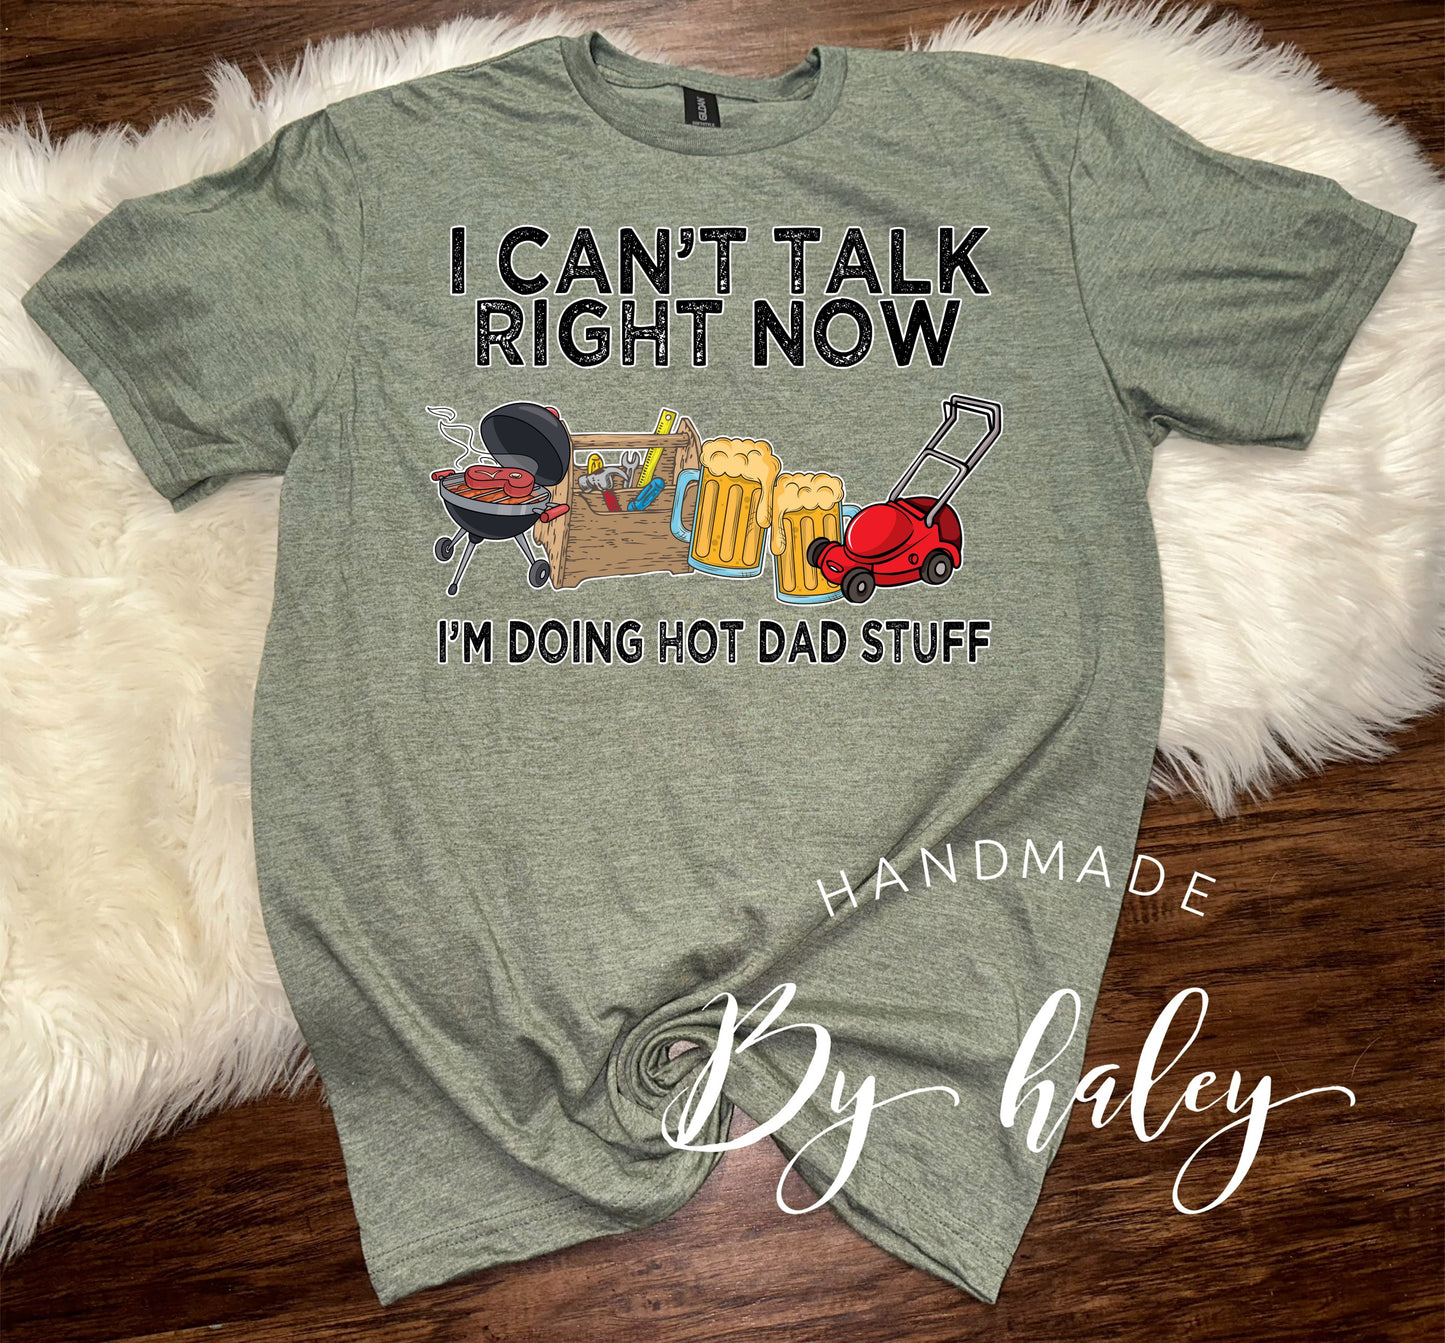 Hot Dad Stuff T-Shirt